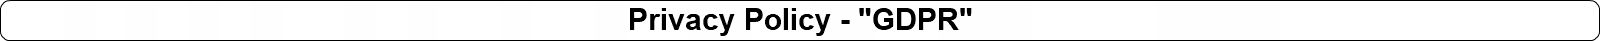 Privacy Policy - "GDPR"